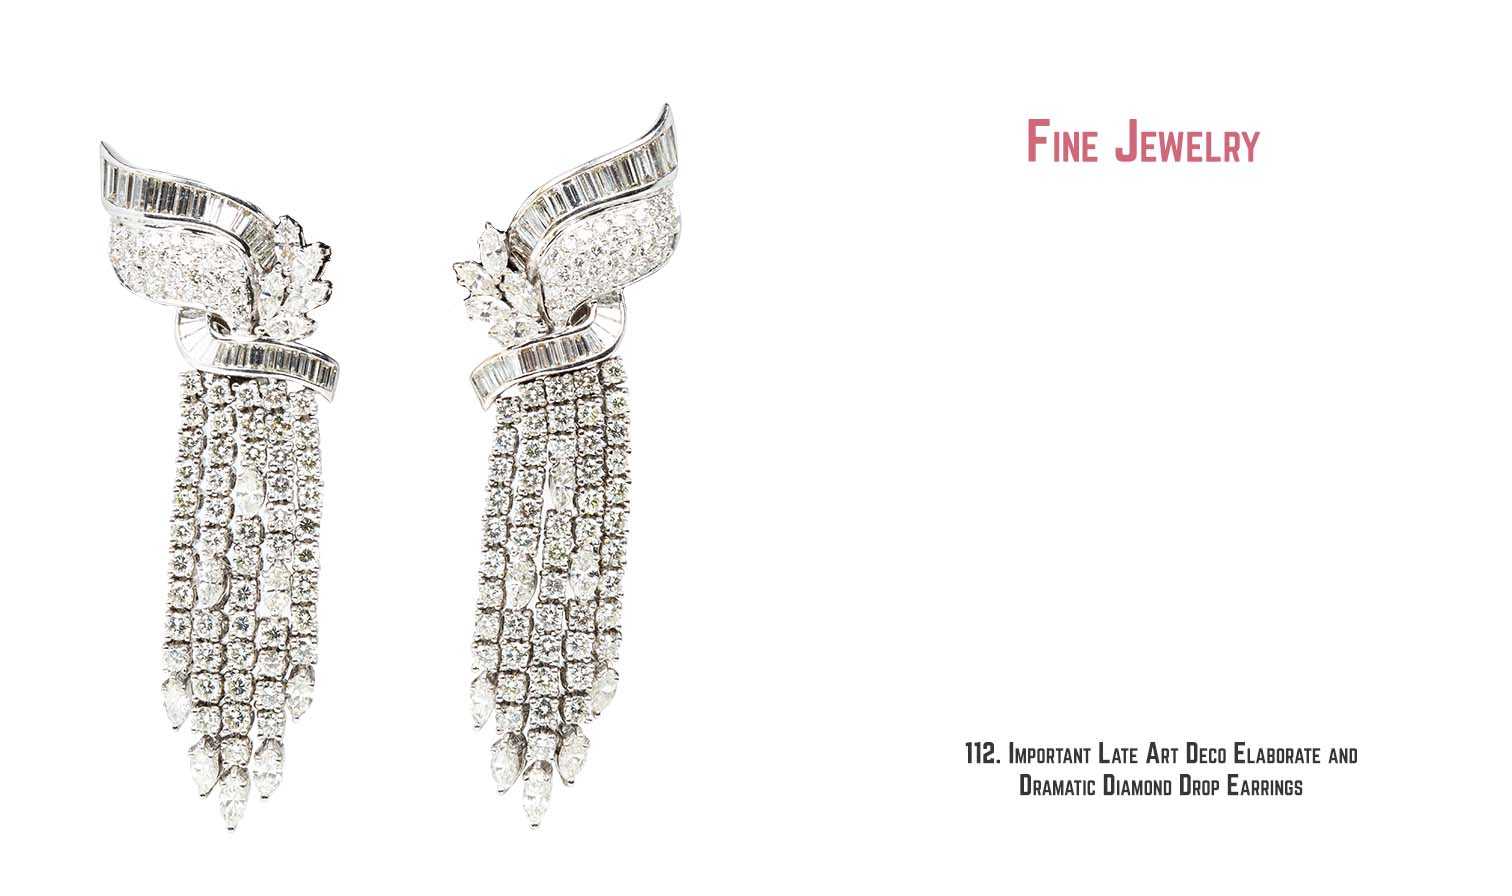 Important Late Art Deco Elaborate and Dramatic Diamond Drop Earrings